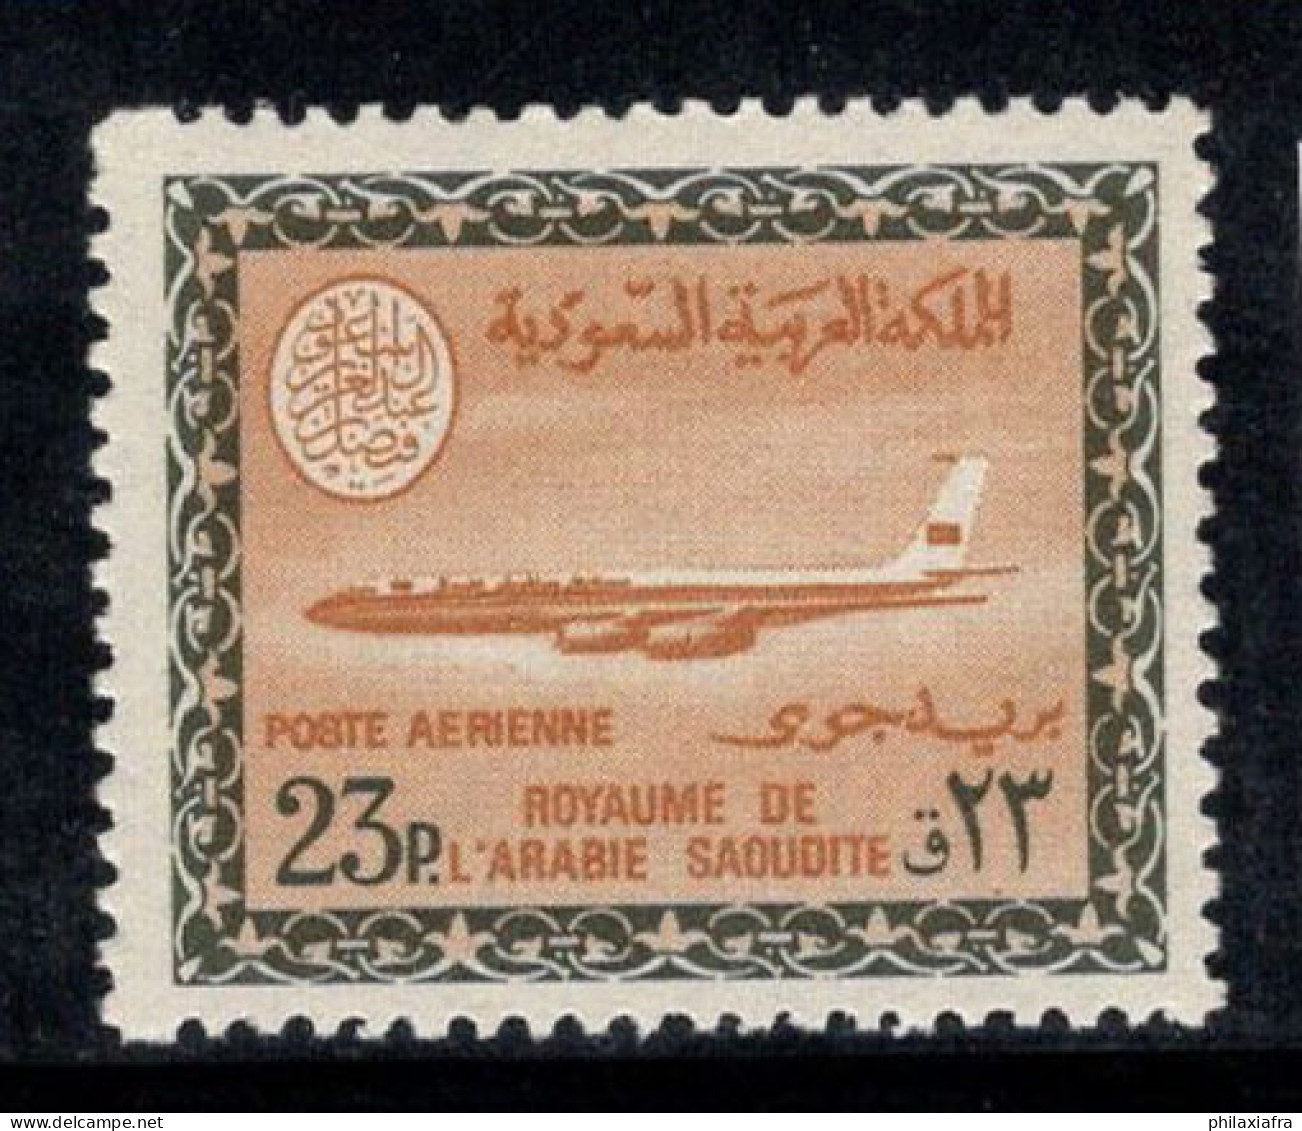 Arabie Saoudite 1966-75 Mi. 375 Y Neuf ** 100% Poste Aérienne 23 Pia, Boeing 720 B - Saoedi-Arabië